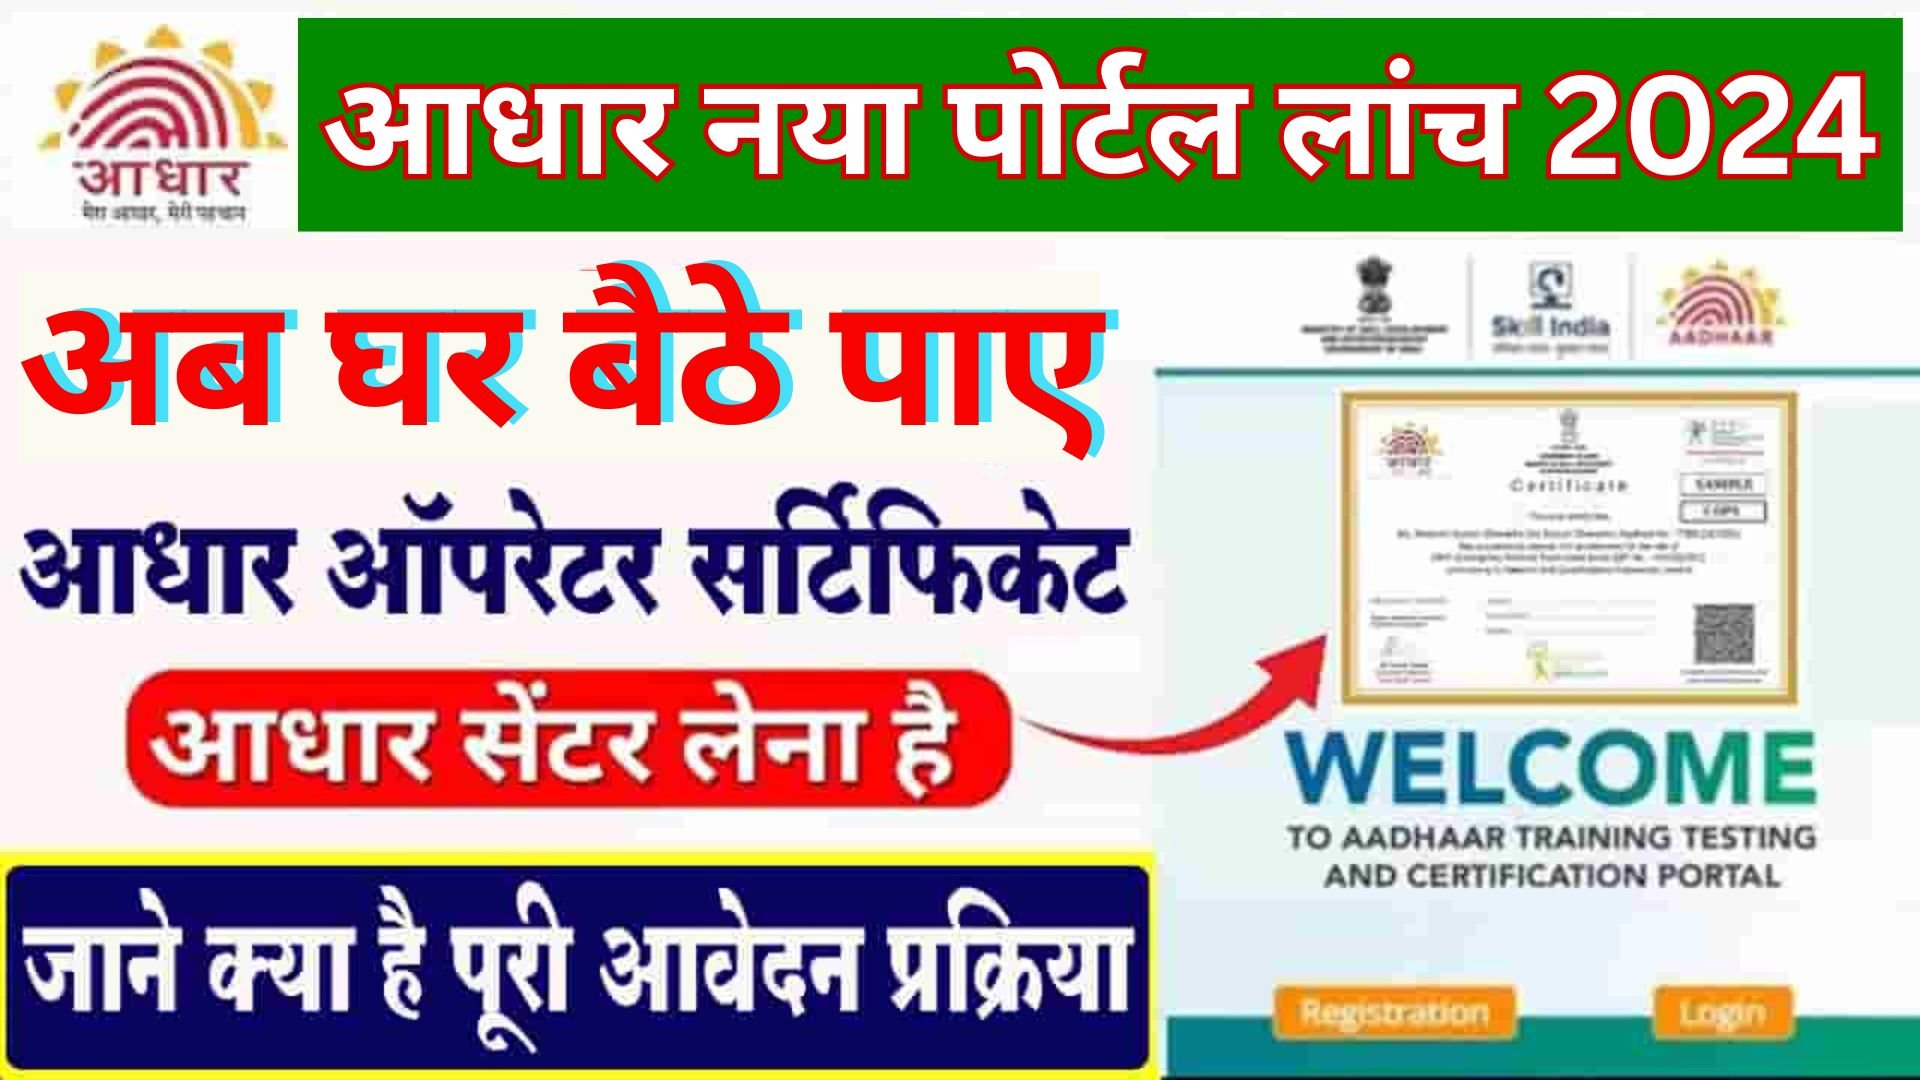 Aadhar Center Certificate Kaise Le 2024 : How To Apply Aadhar Center Certificate जाने यहाँ से इसका सम्पूर्ण प्रोसेस